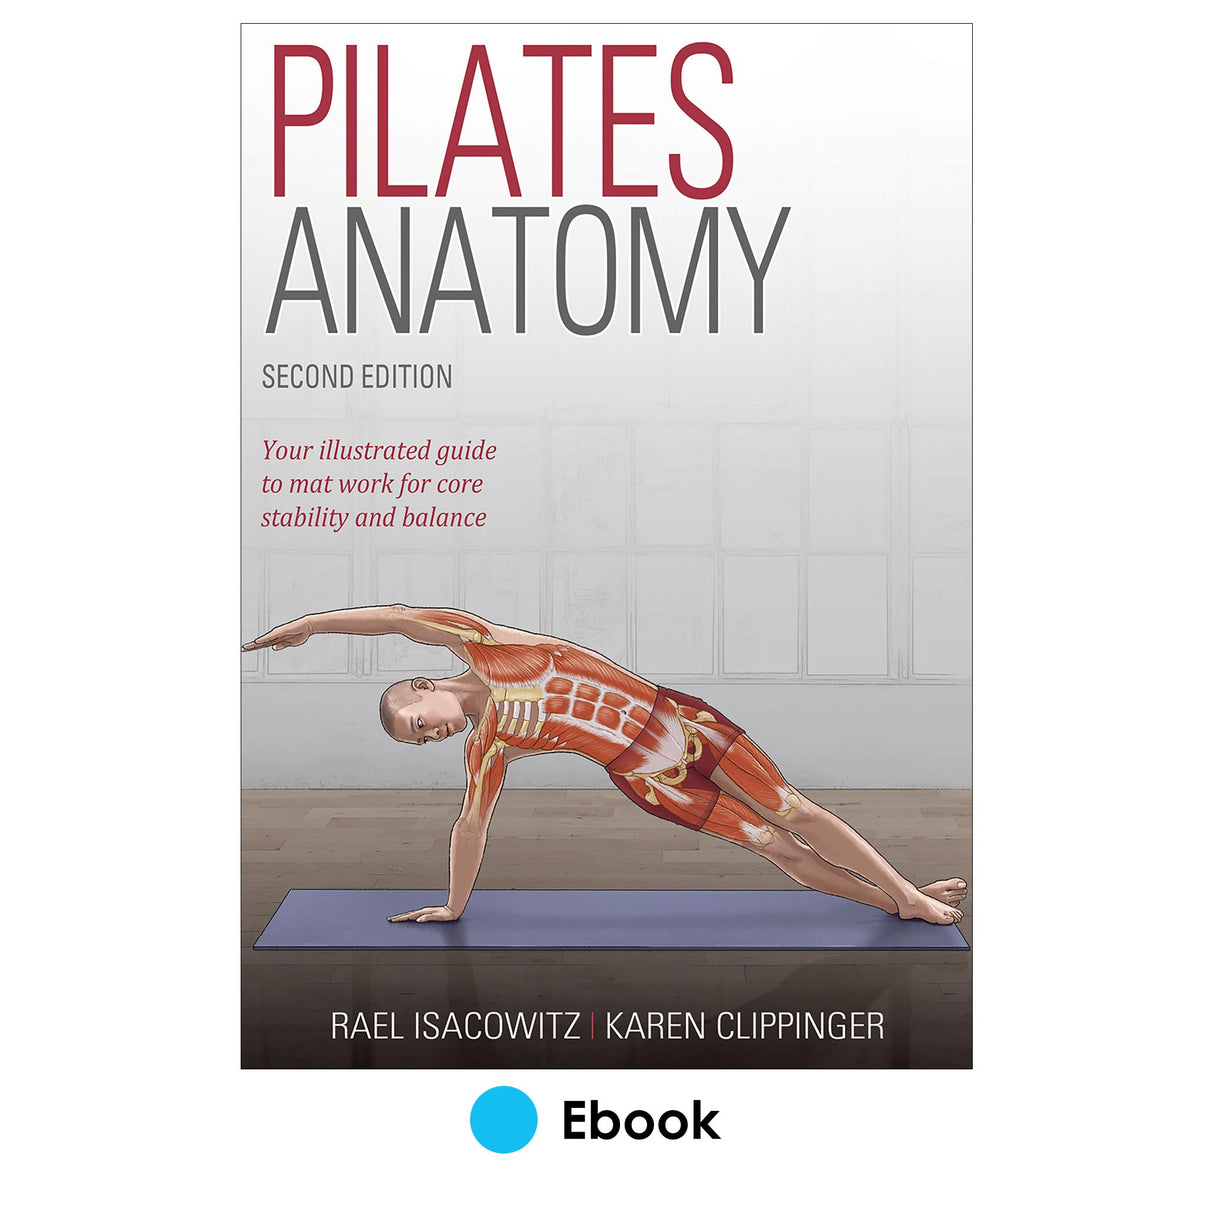 Pilates Anatomy 2nd Edition epub